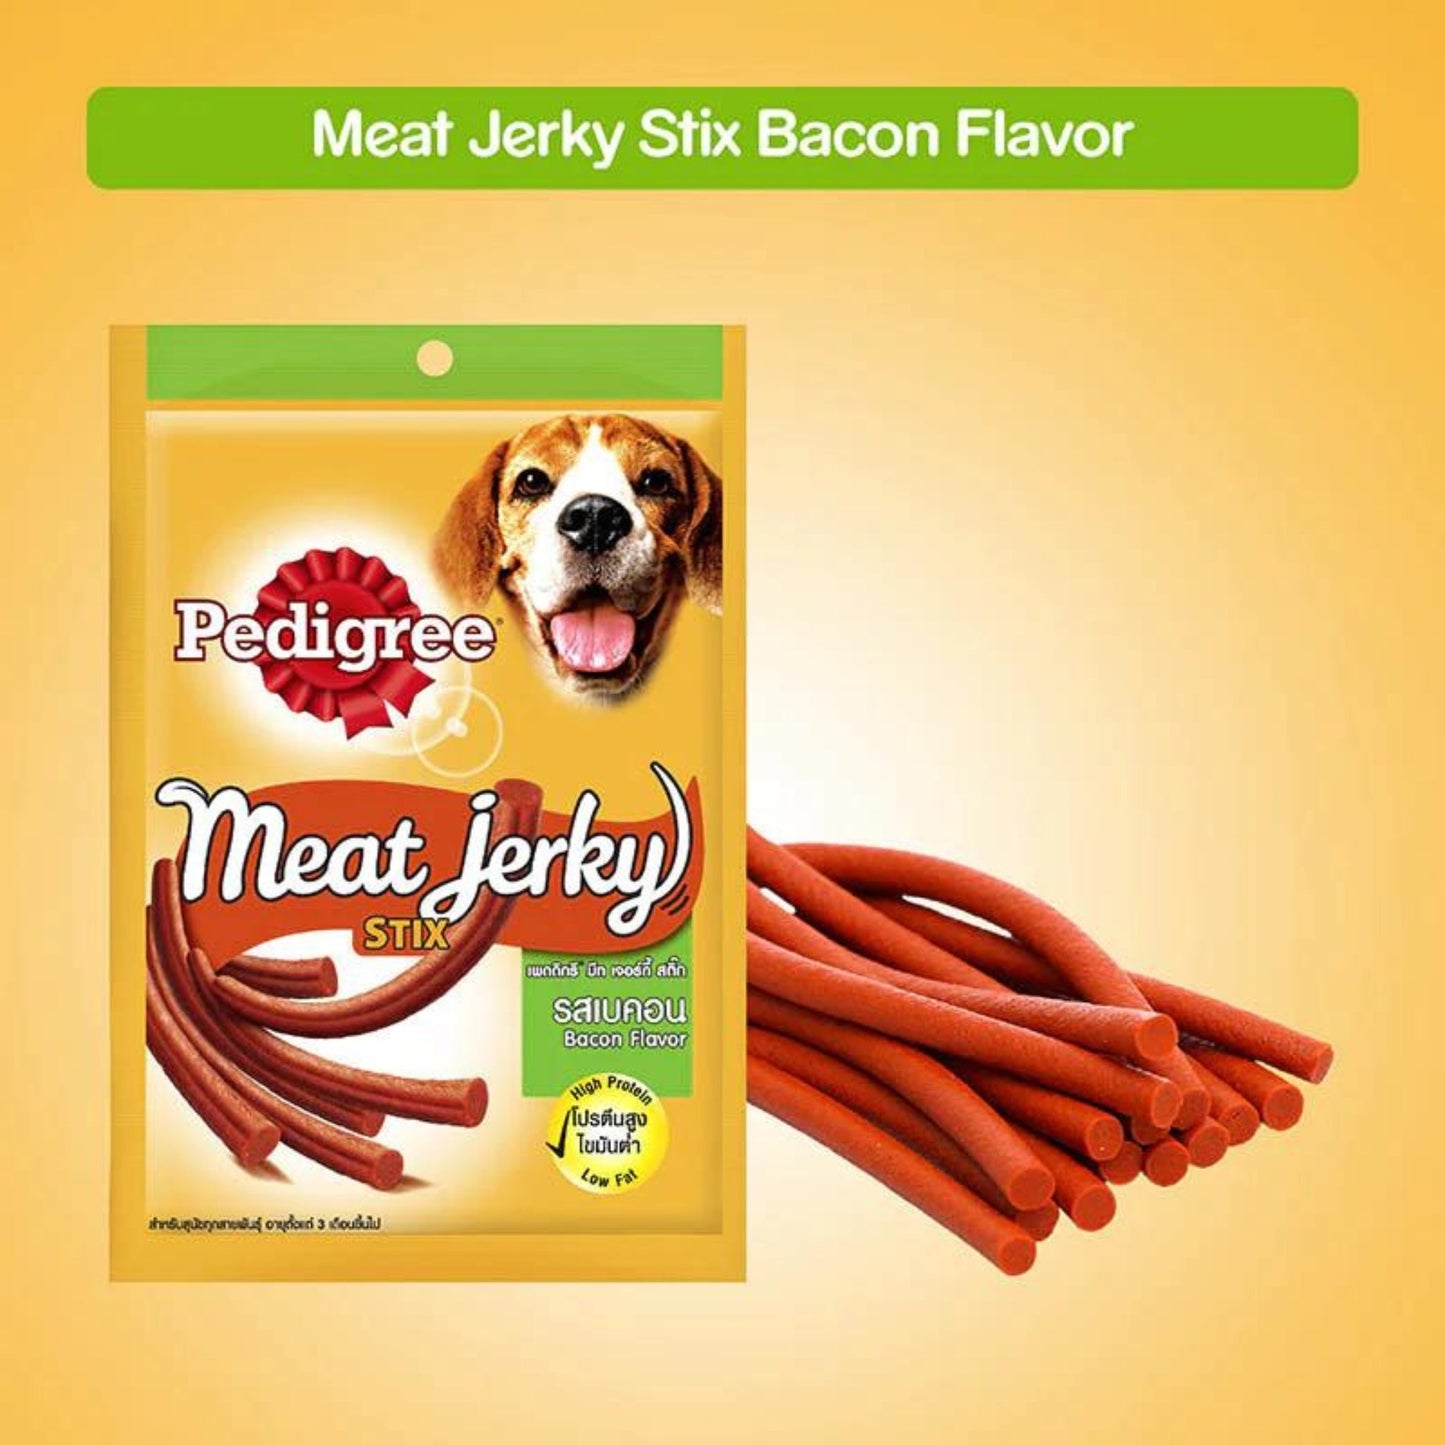 Pedigree Meat Jerky Bacon Stix Dog Treat - 60gm, Pack of 3